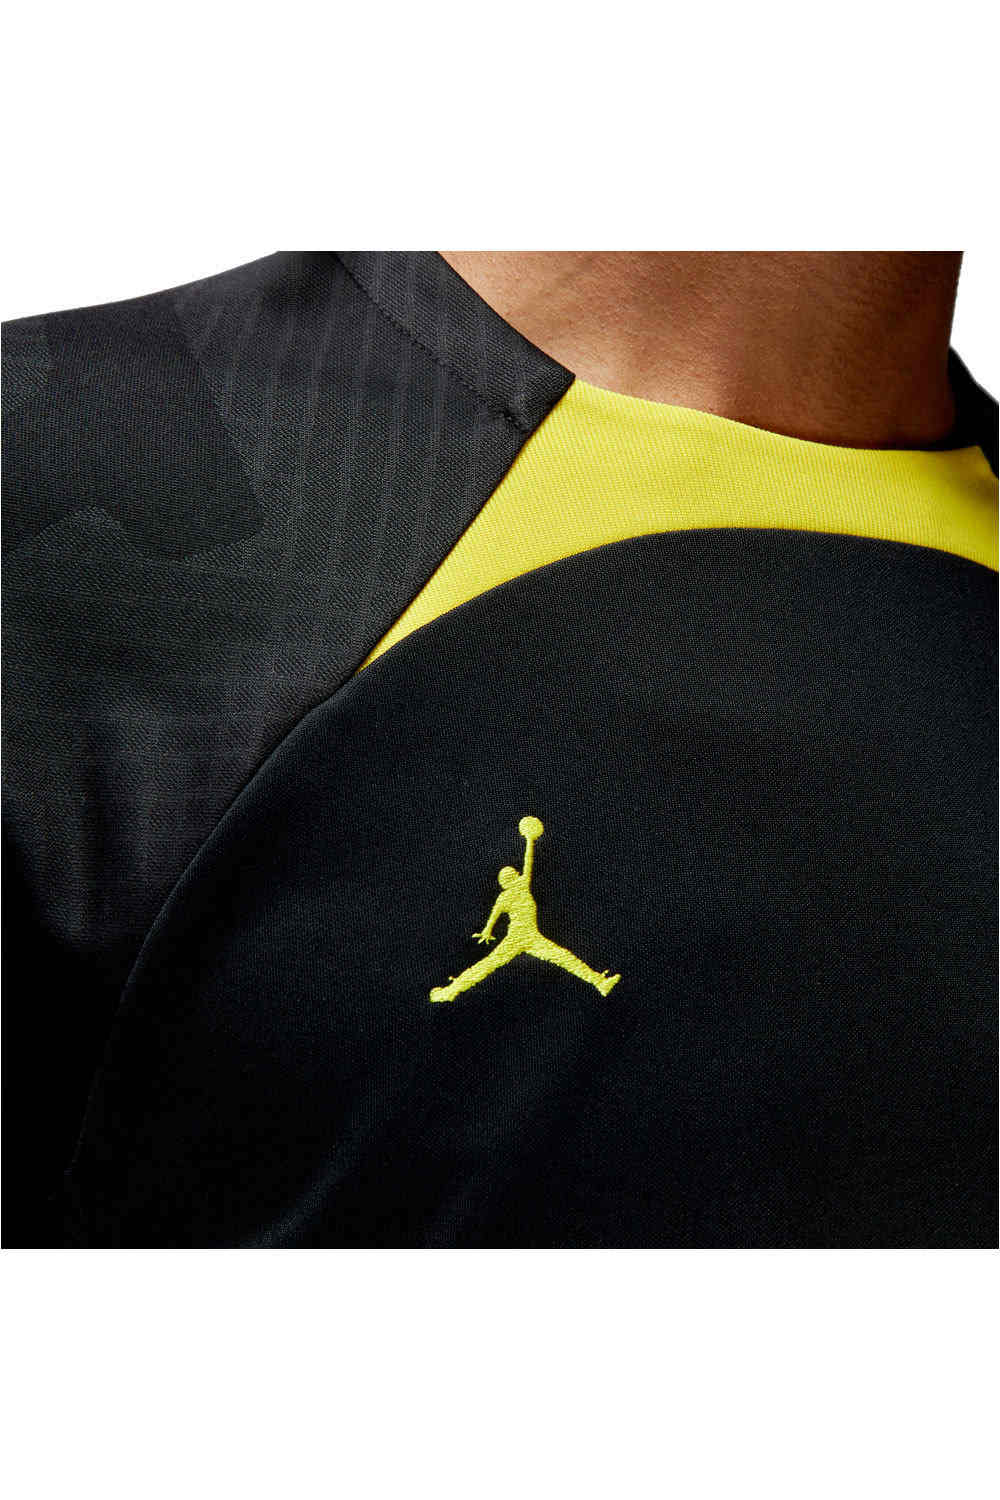 Nike camiseta de fútbol oficiales PSG 23 DF STRK SS TOP NEAM vista detalle